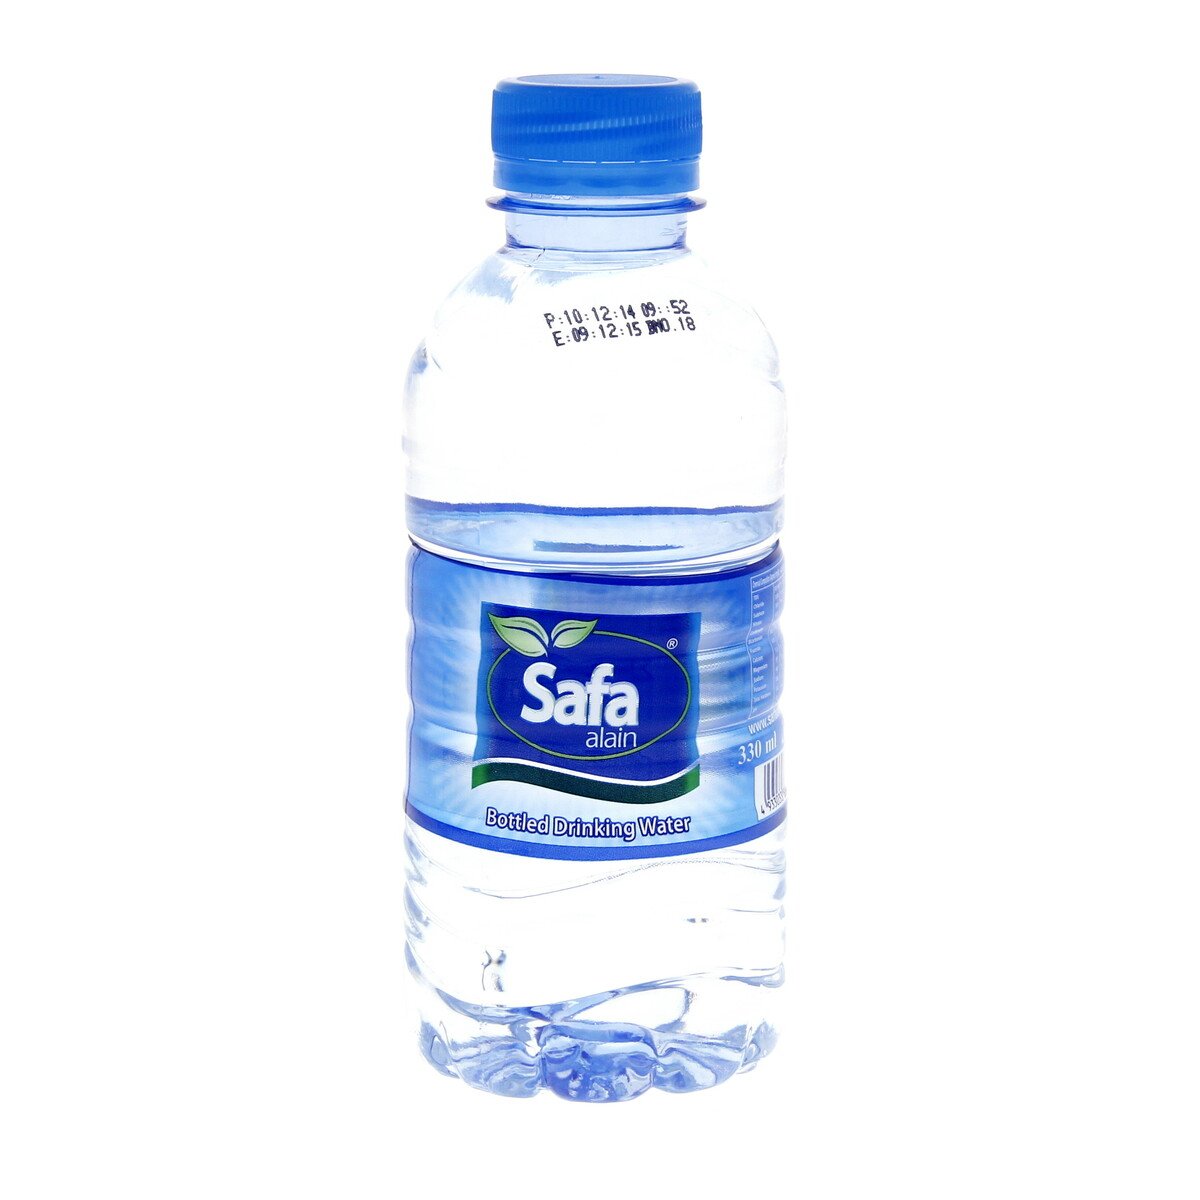 Safa Alain Bottled Drinking Water 12 x 330 ml